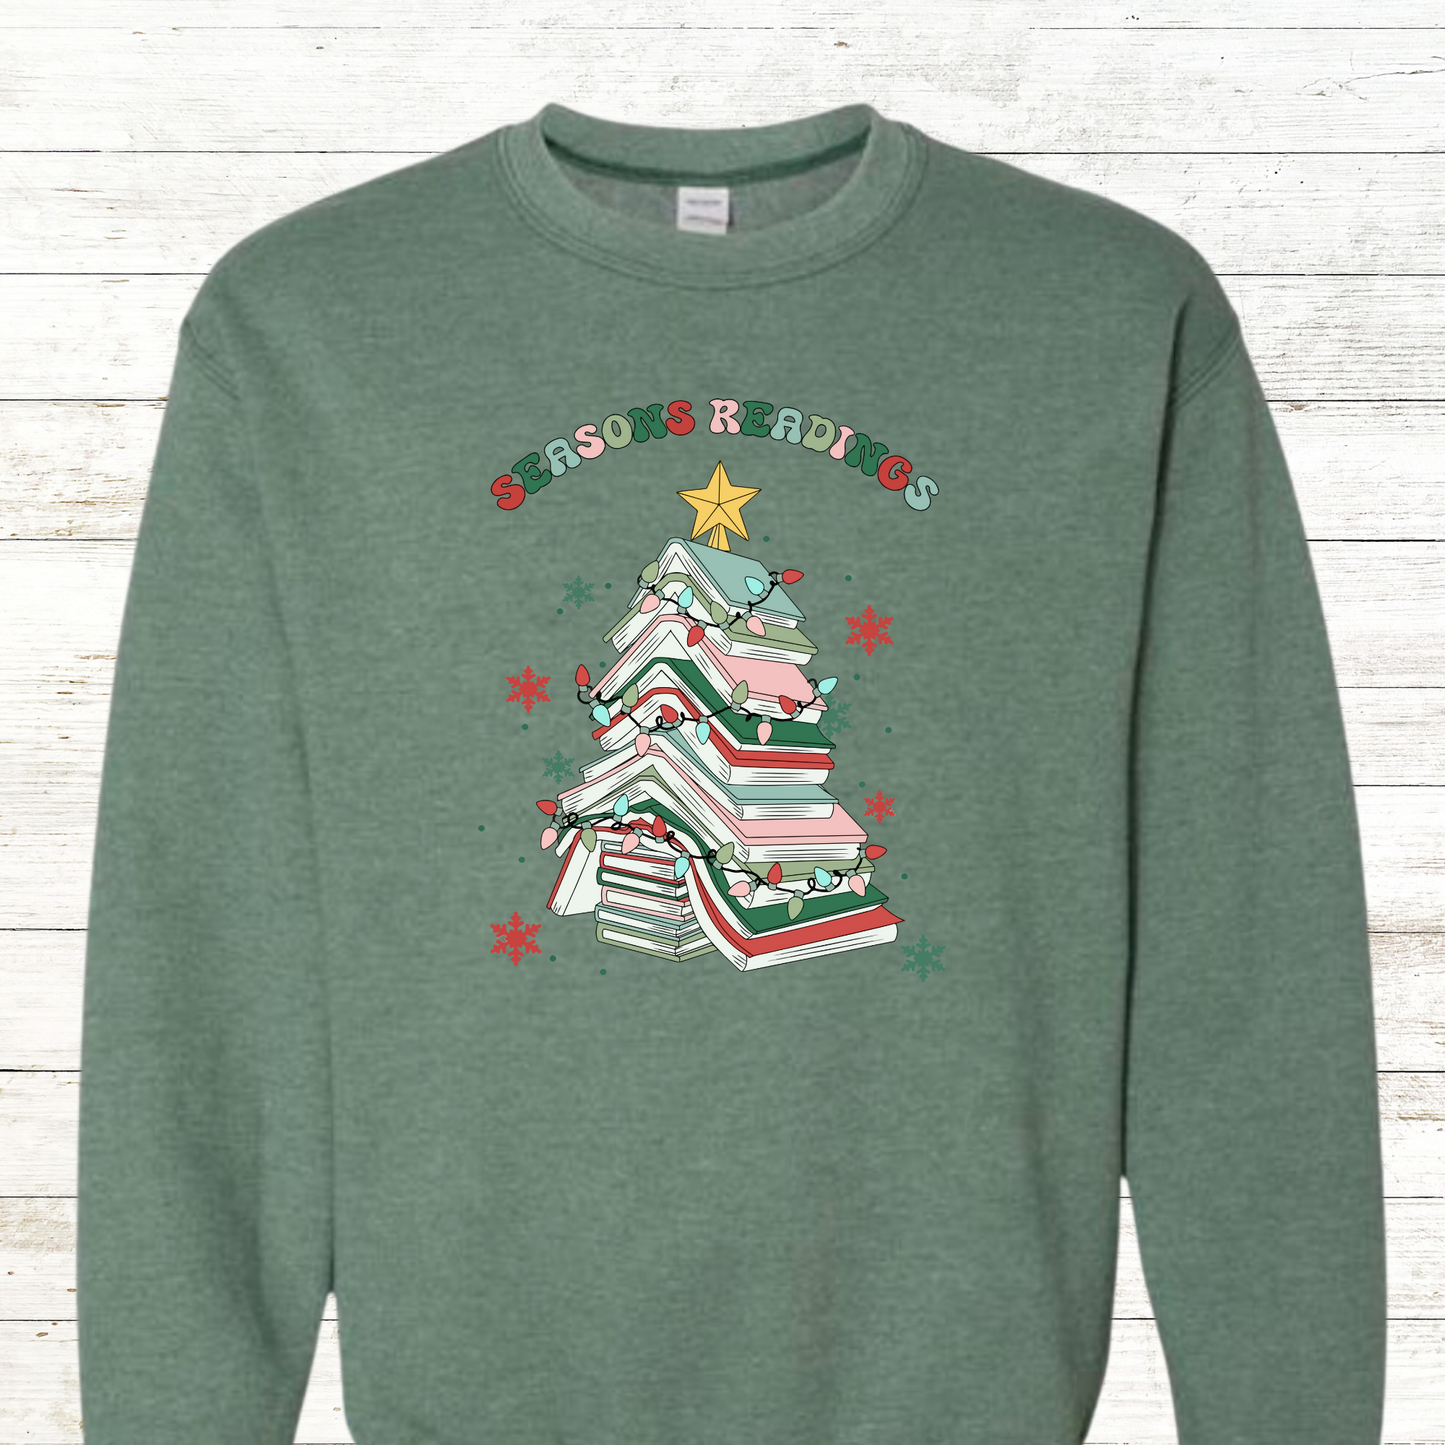 Seasons Reading -  Christmas Teacher / Adult Sweatshirt - Back Personalization Option